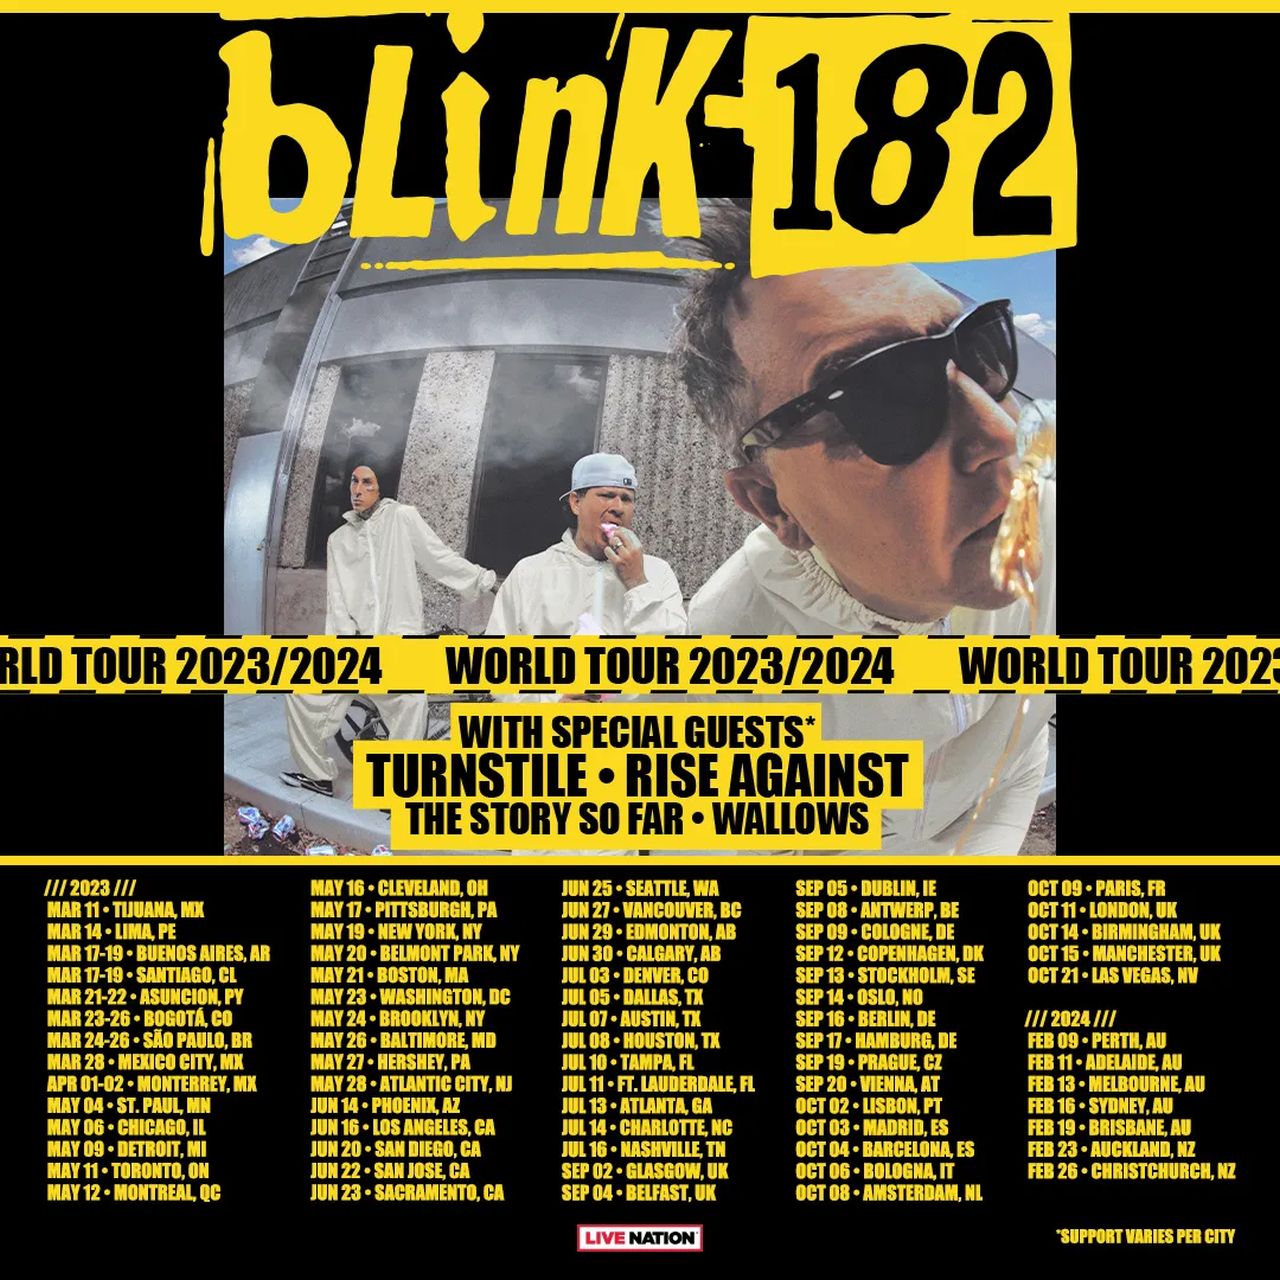 blink 182 europe tour setlist